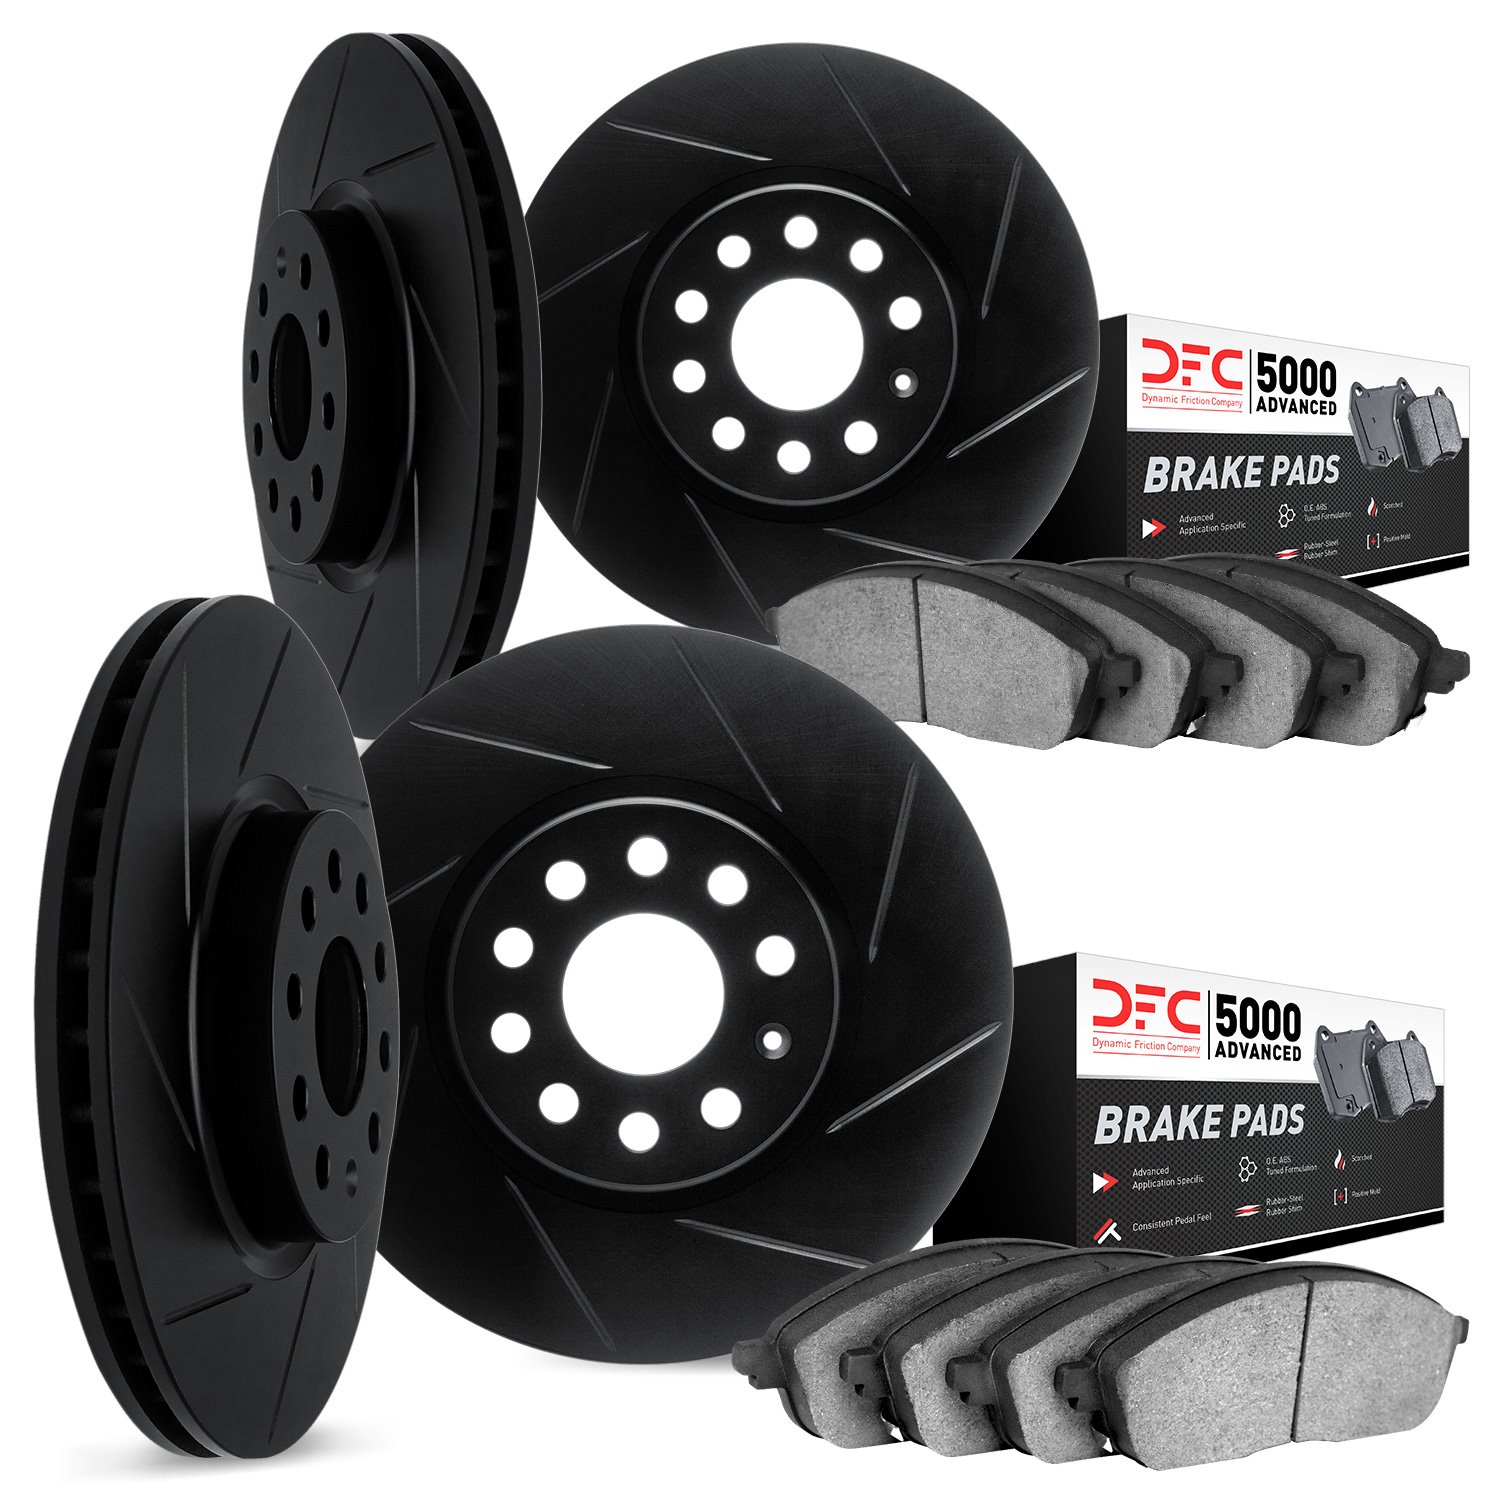 3514-74032 Slotted Brake Rotors w/5000 Advanced Brake Pads Kit & Hardware [Black], 2003-2015 Multiple Makes/Models, Position: Fr